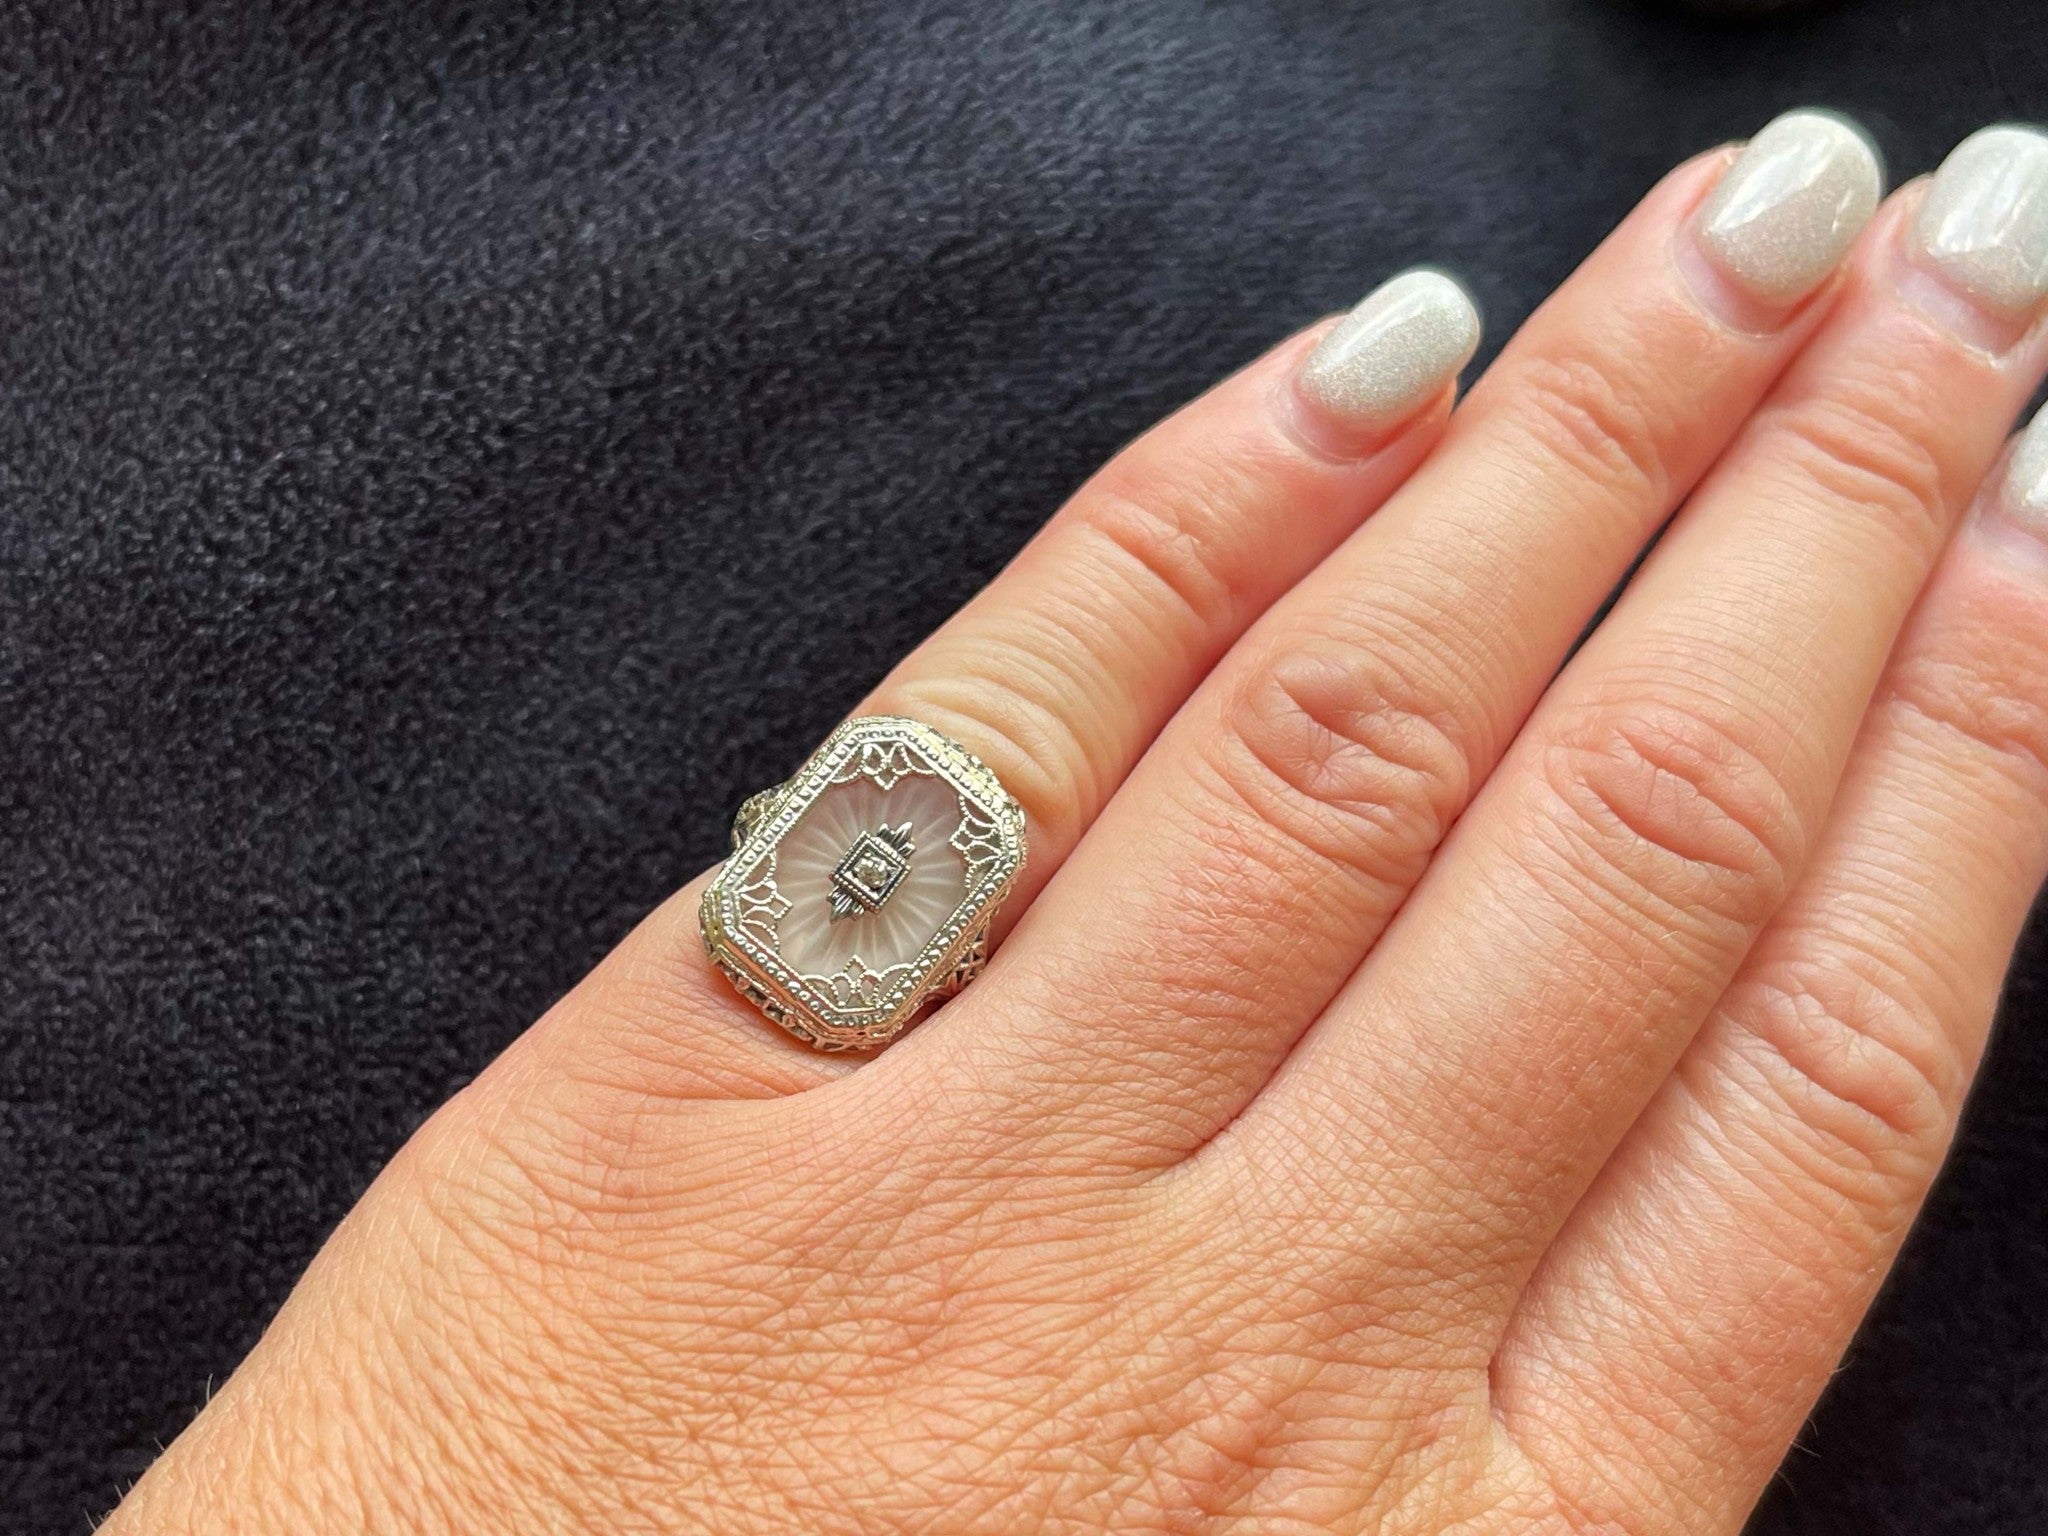 Art Deco Filigree Carved Rock Crystal Diamond Ring in 14k White Gold